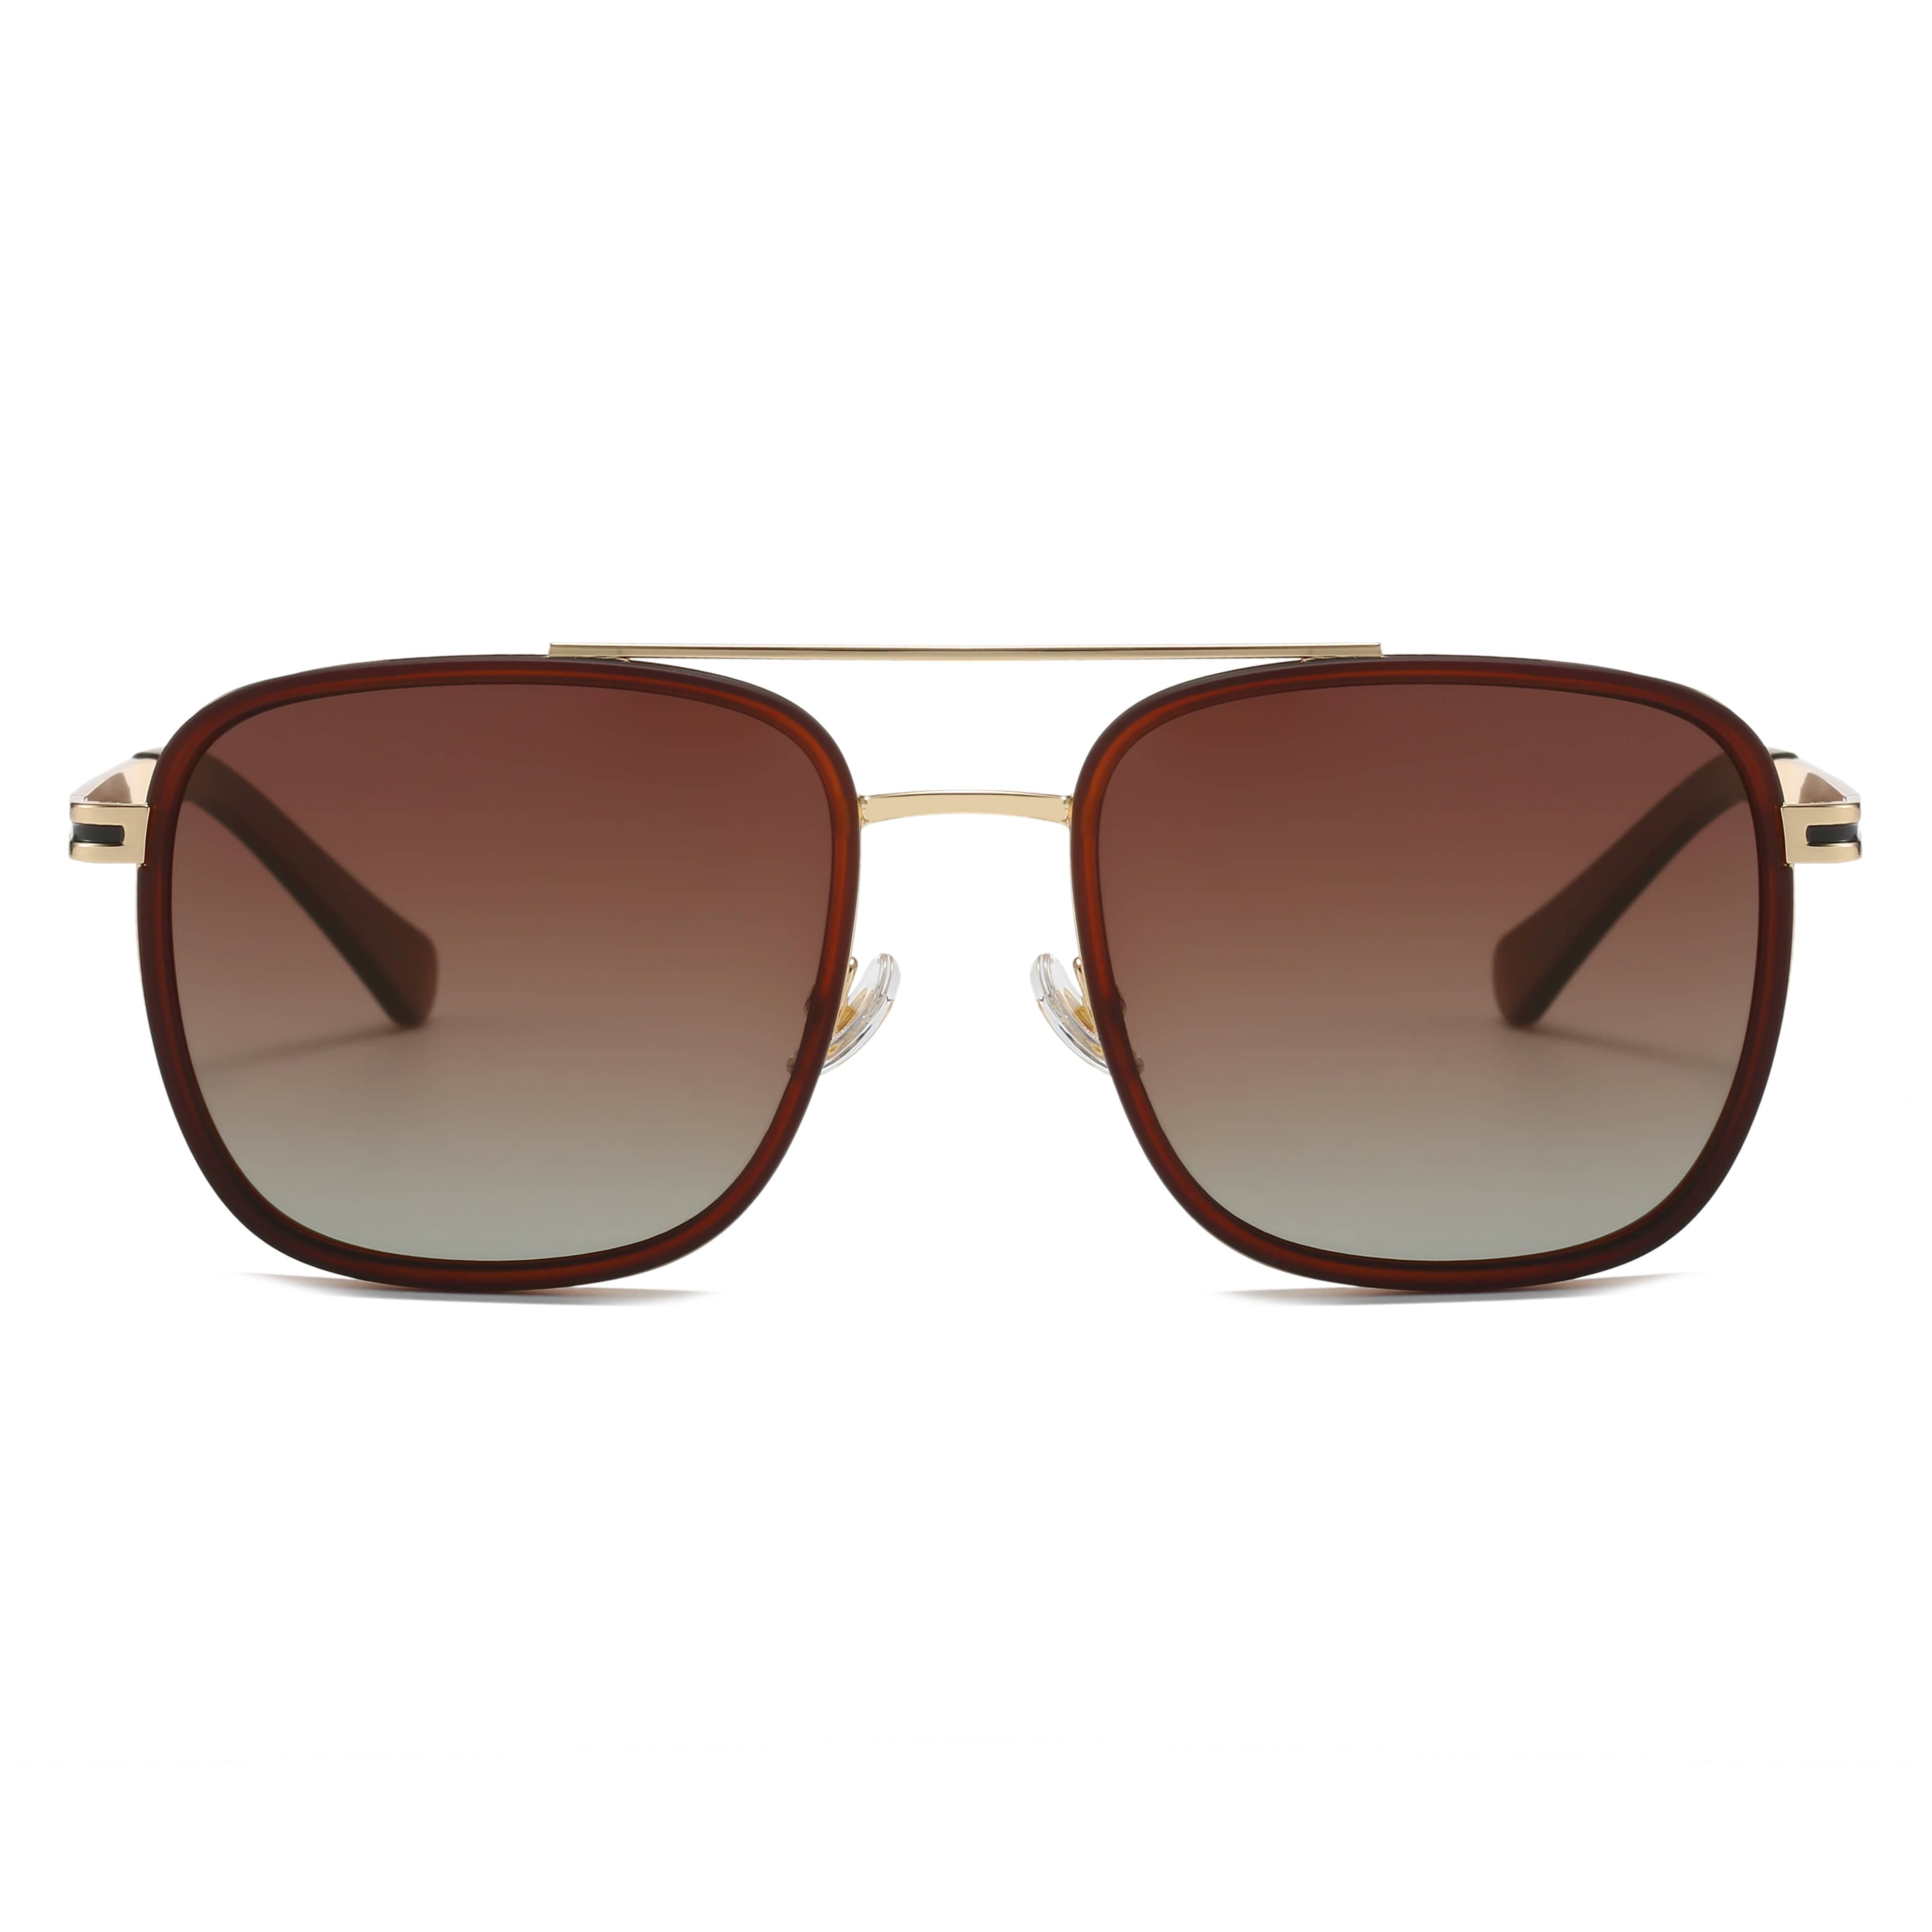 GIUSTIZIERI VECCHI Sunglasses Medium / Light Gold/Brown RegalRose Duo